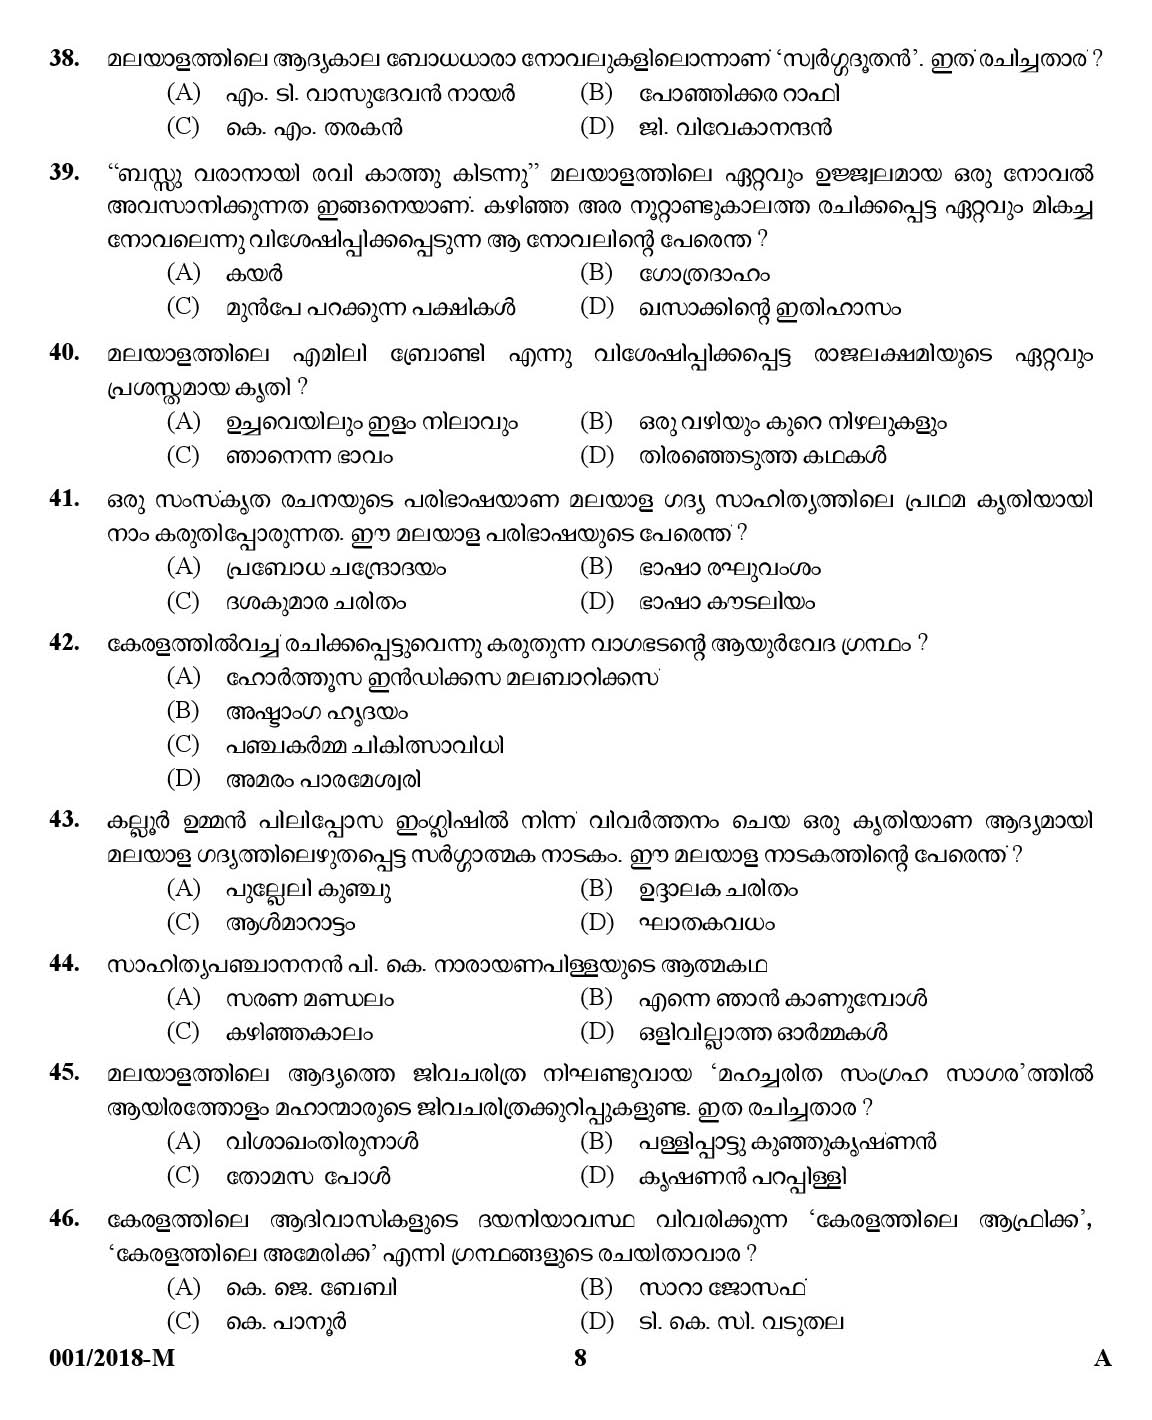 Kerala PSC High School Assistant Malayalam Question Code 0012018 M 7